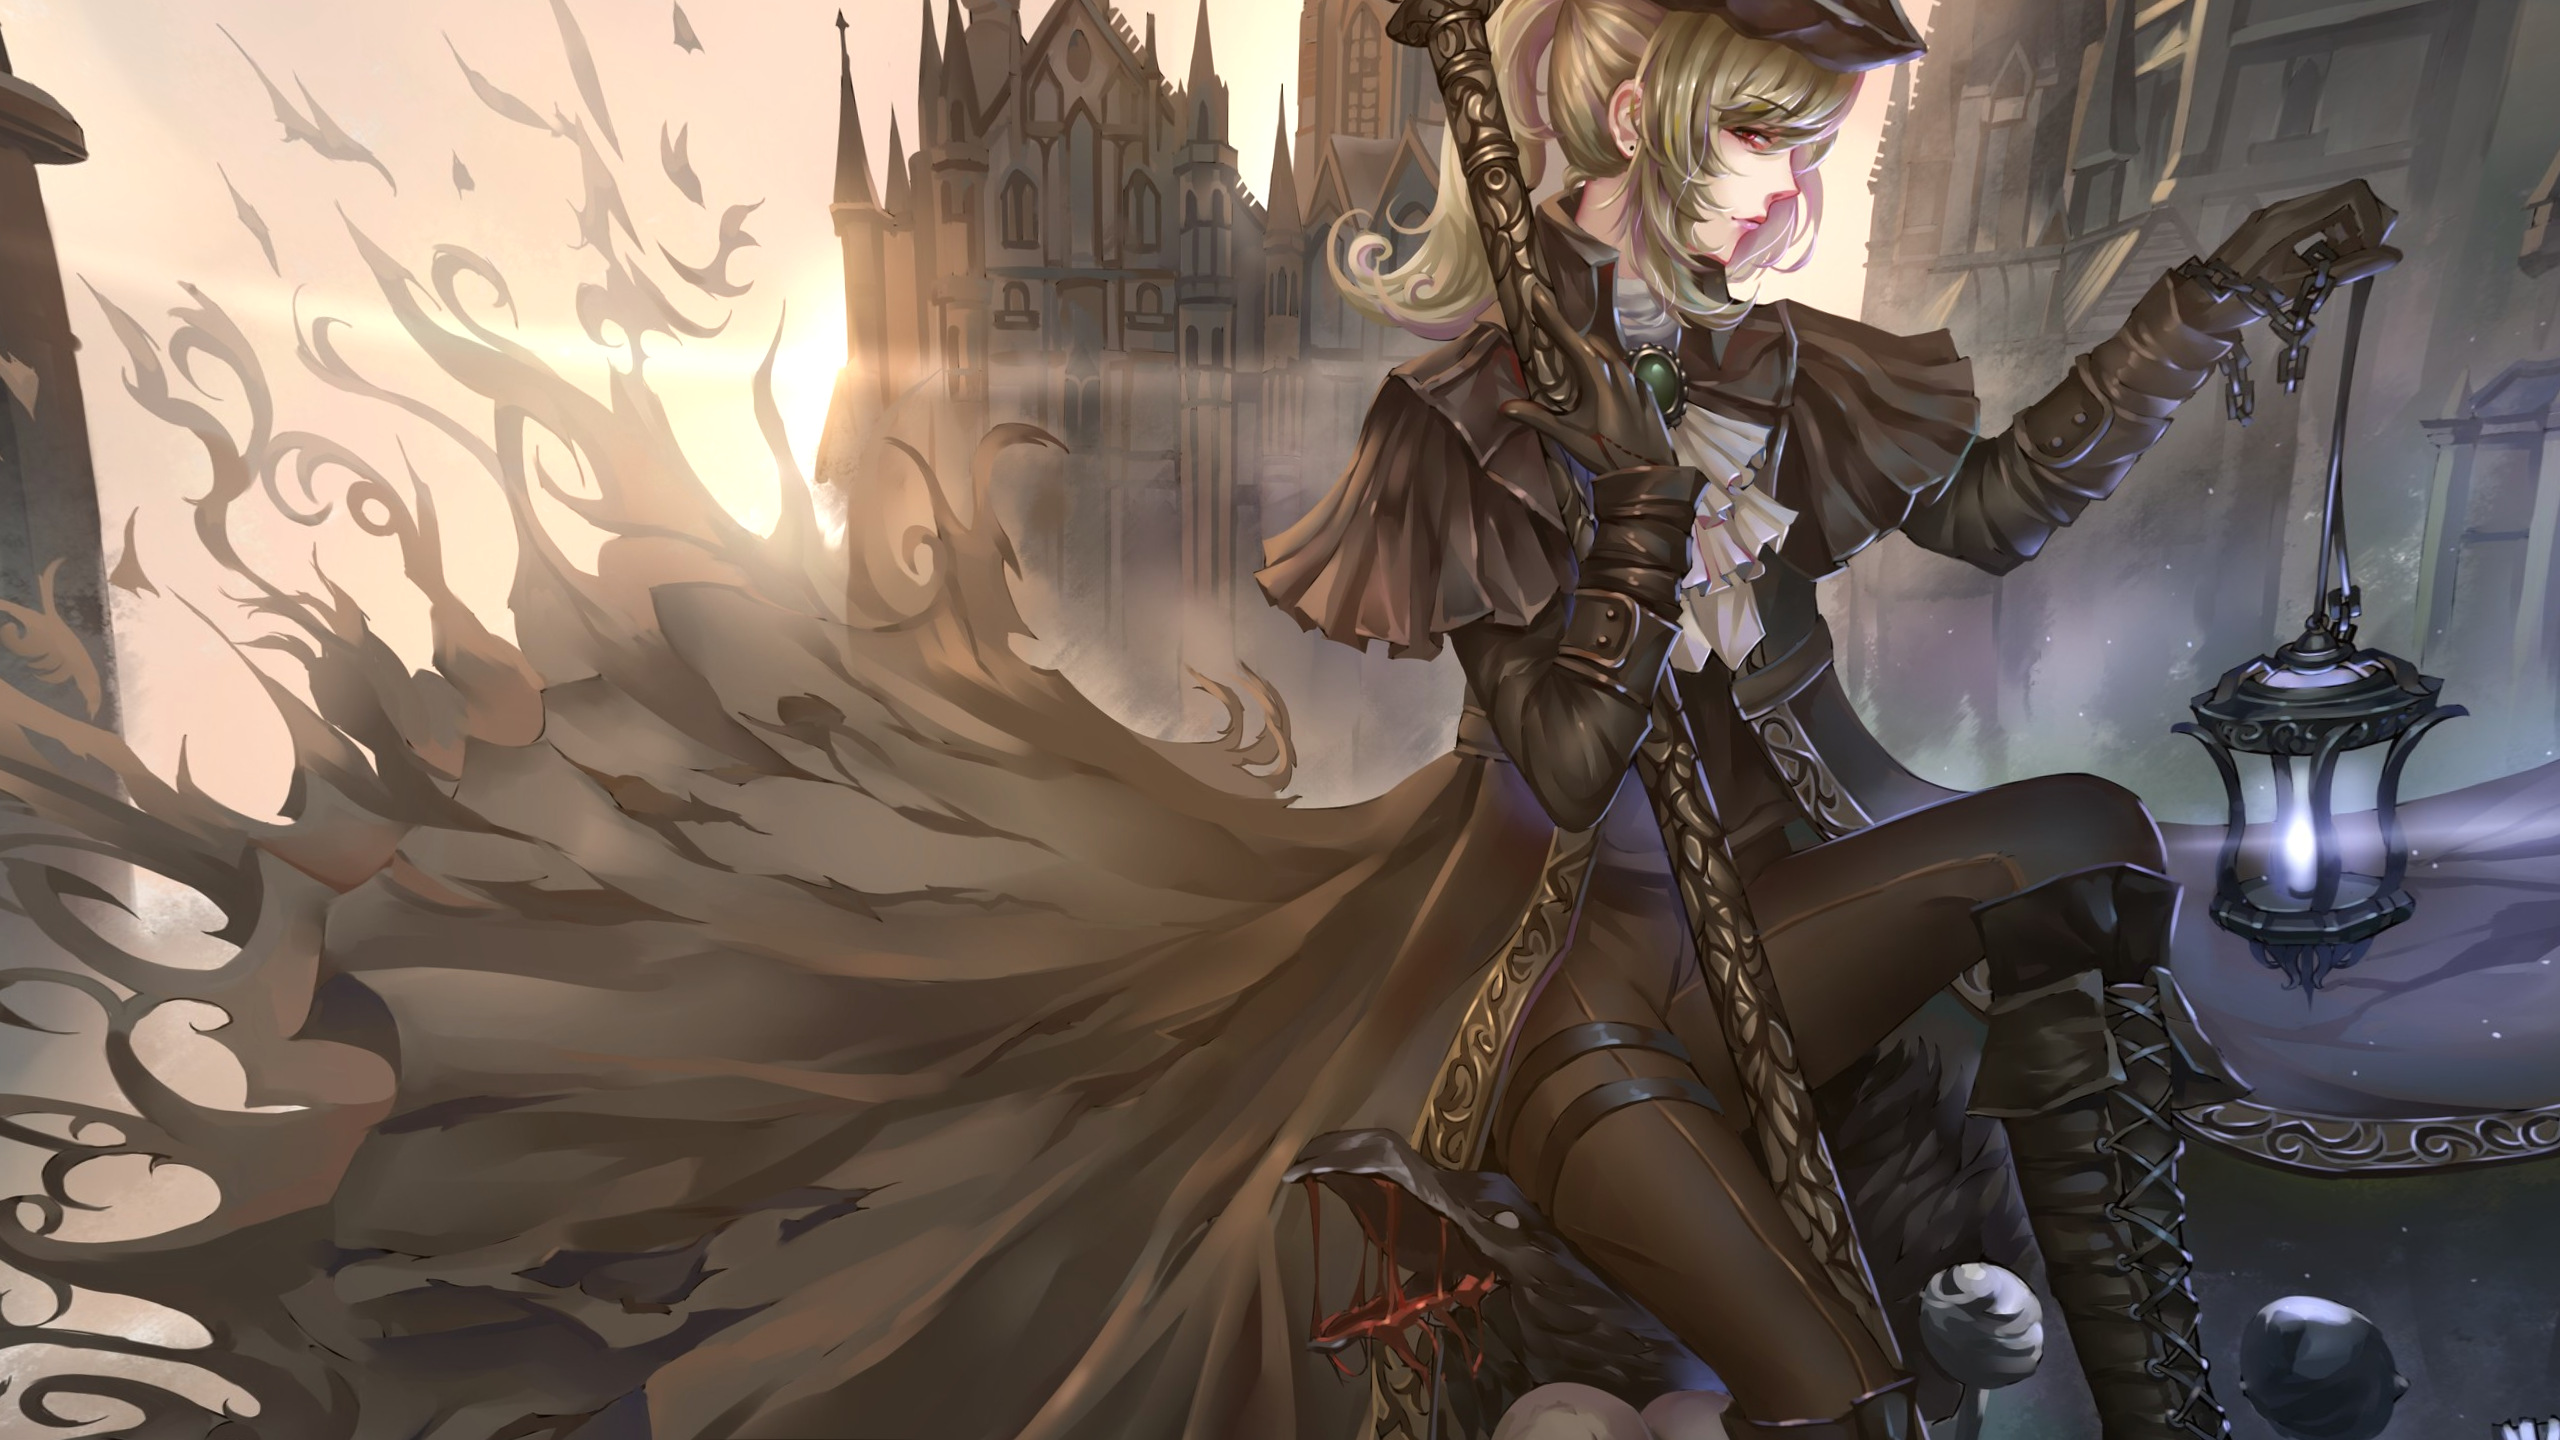 General 2560x1440 anime girls Gothic anime fantasy armor knight